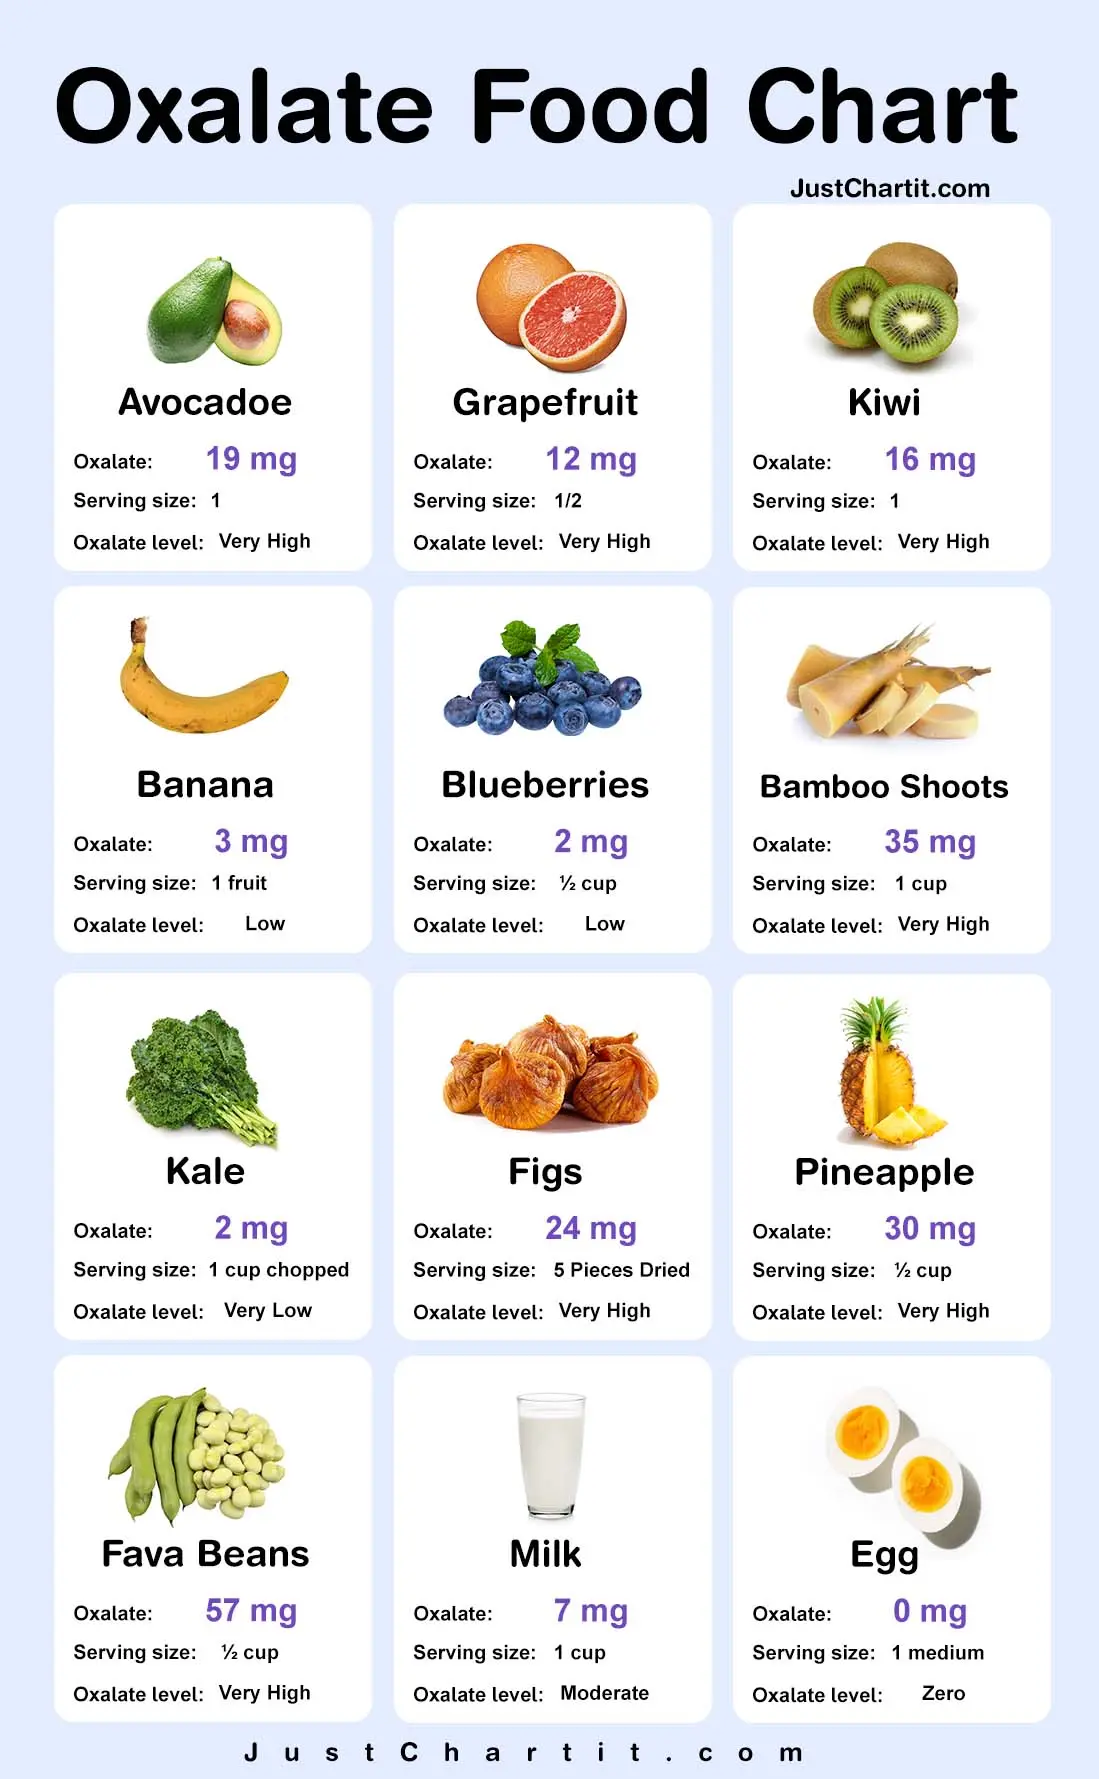 oxalate-food-chart-low-high-oxalate-level-foods-list